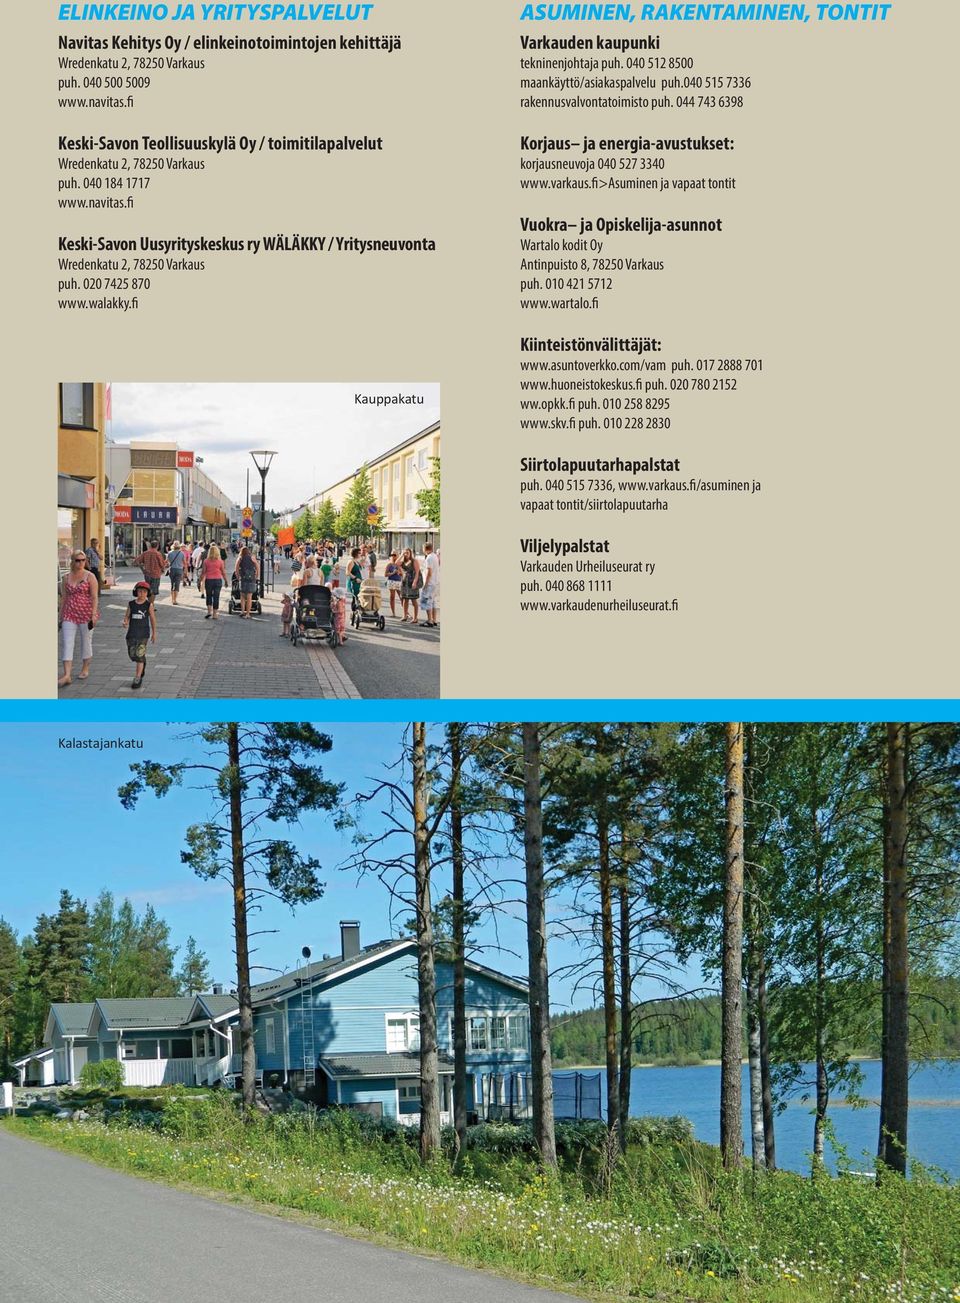 fi Keski-Savon Uusyrityskeskus ry WÄLÄKKY / Yritysneuvonta Wredenkatu 2, 78250 Varkaus puh. 020 7425 870 www.walakky.